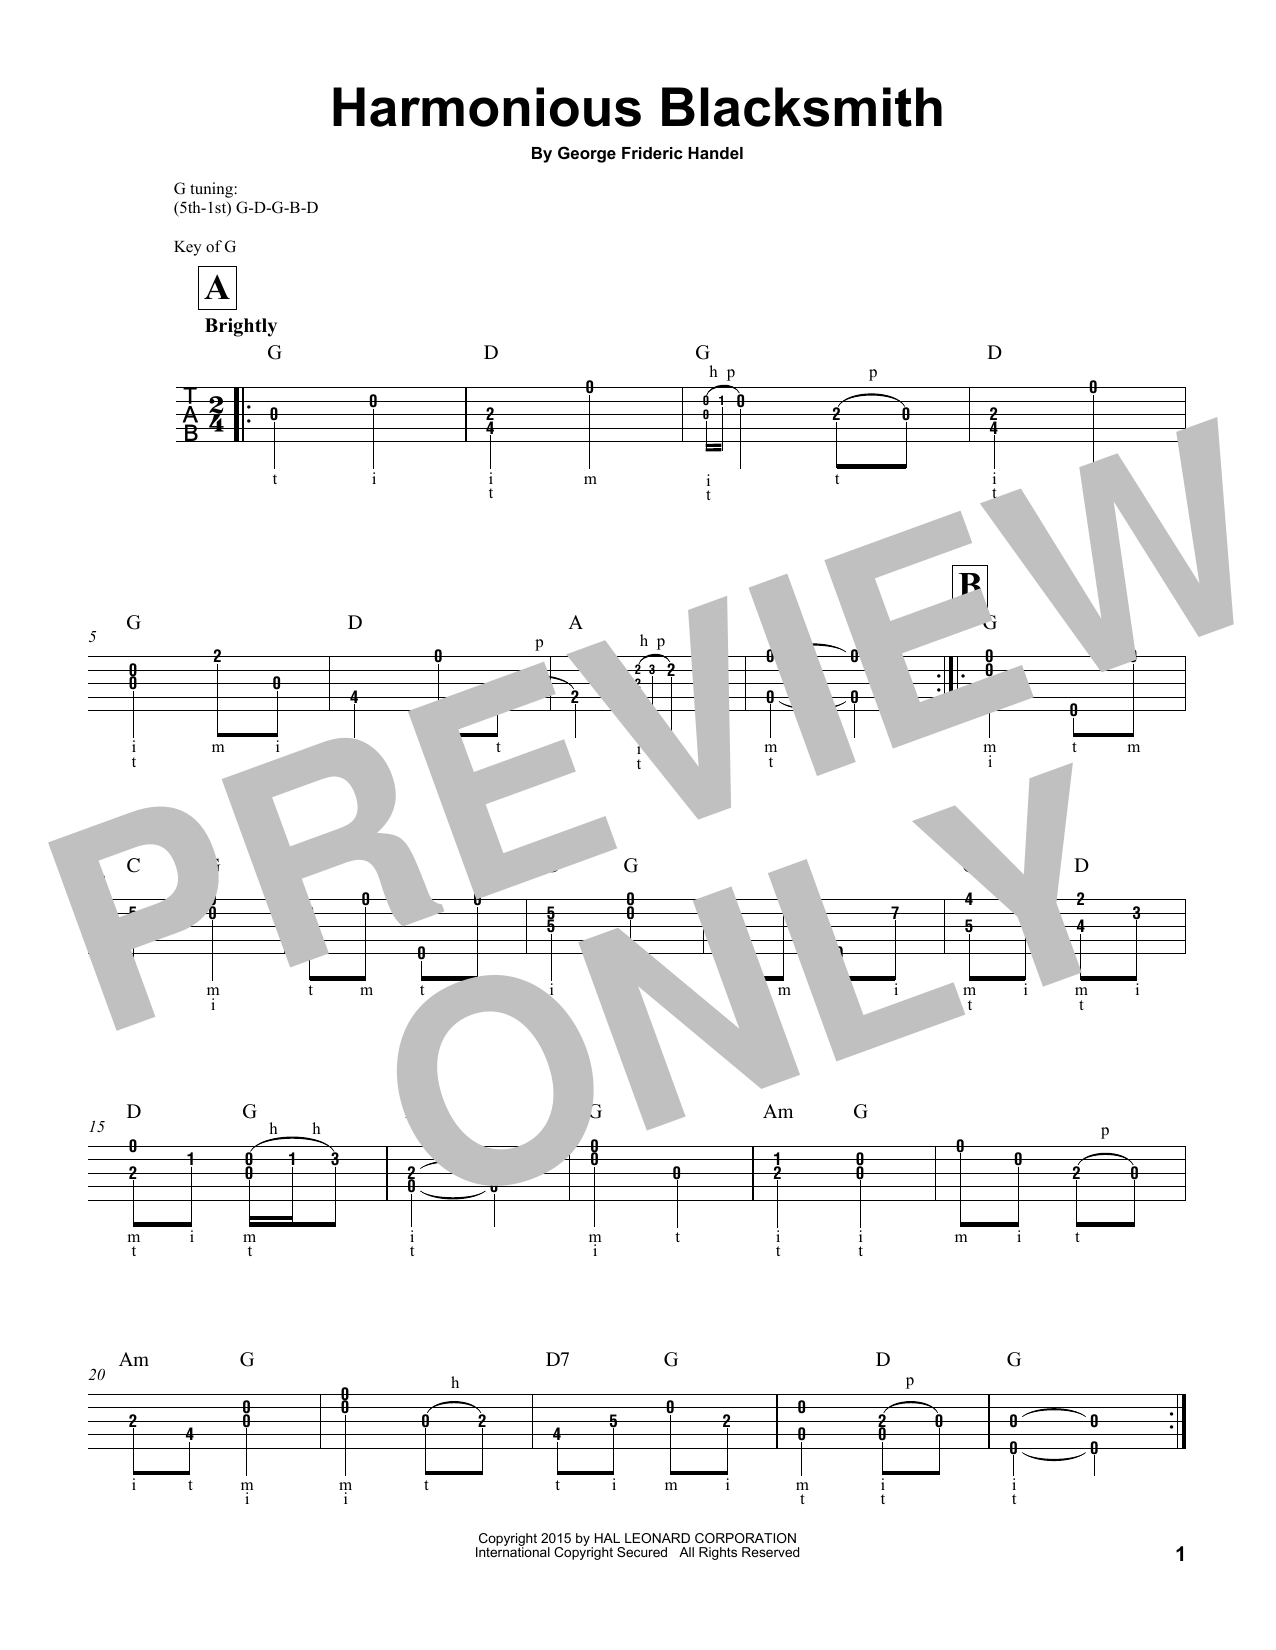 George Frideric Handel Harmonious Blacksmith Sheet Music Notes & Chords for Alto Saxophone - Download or Print PDF